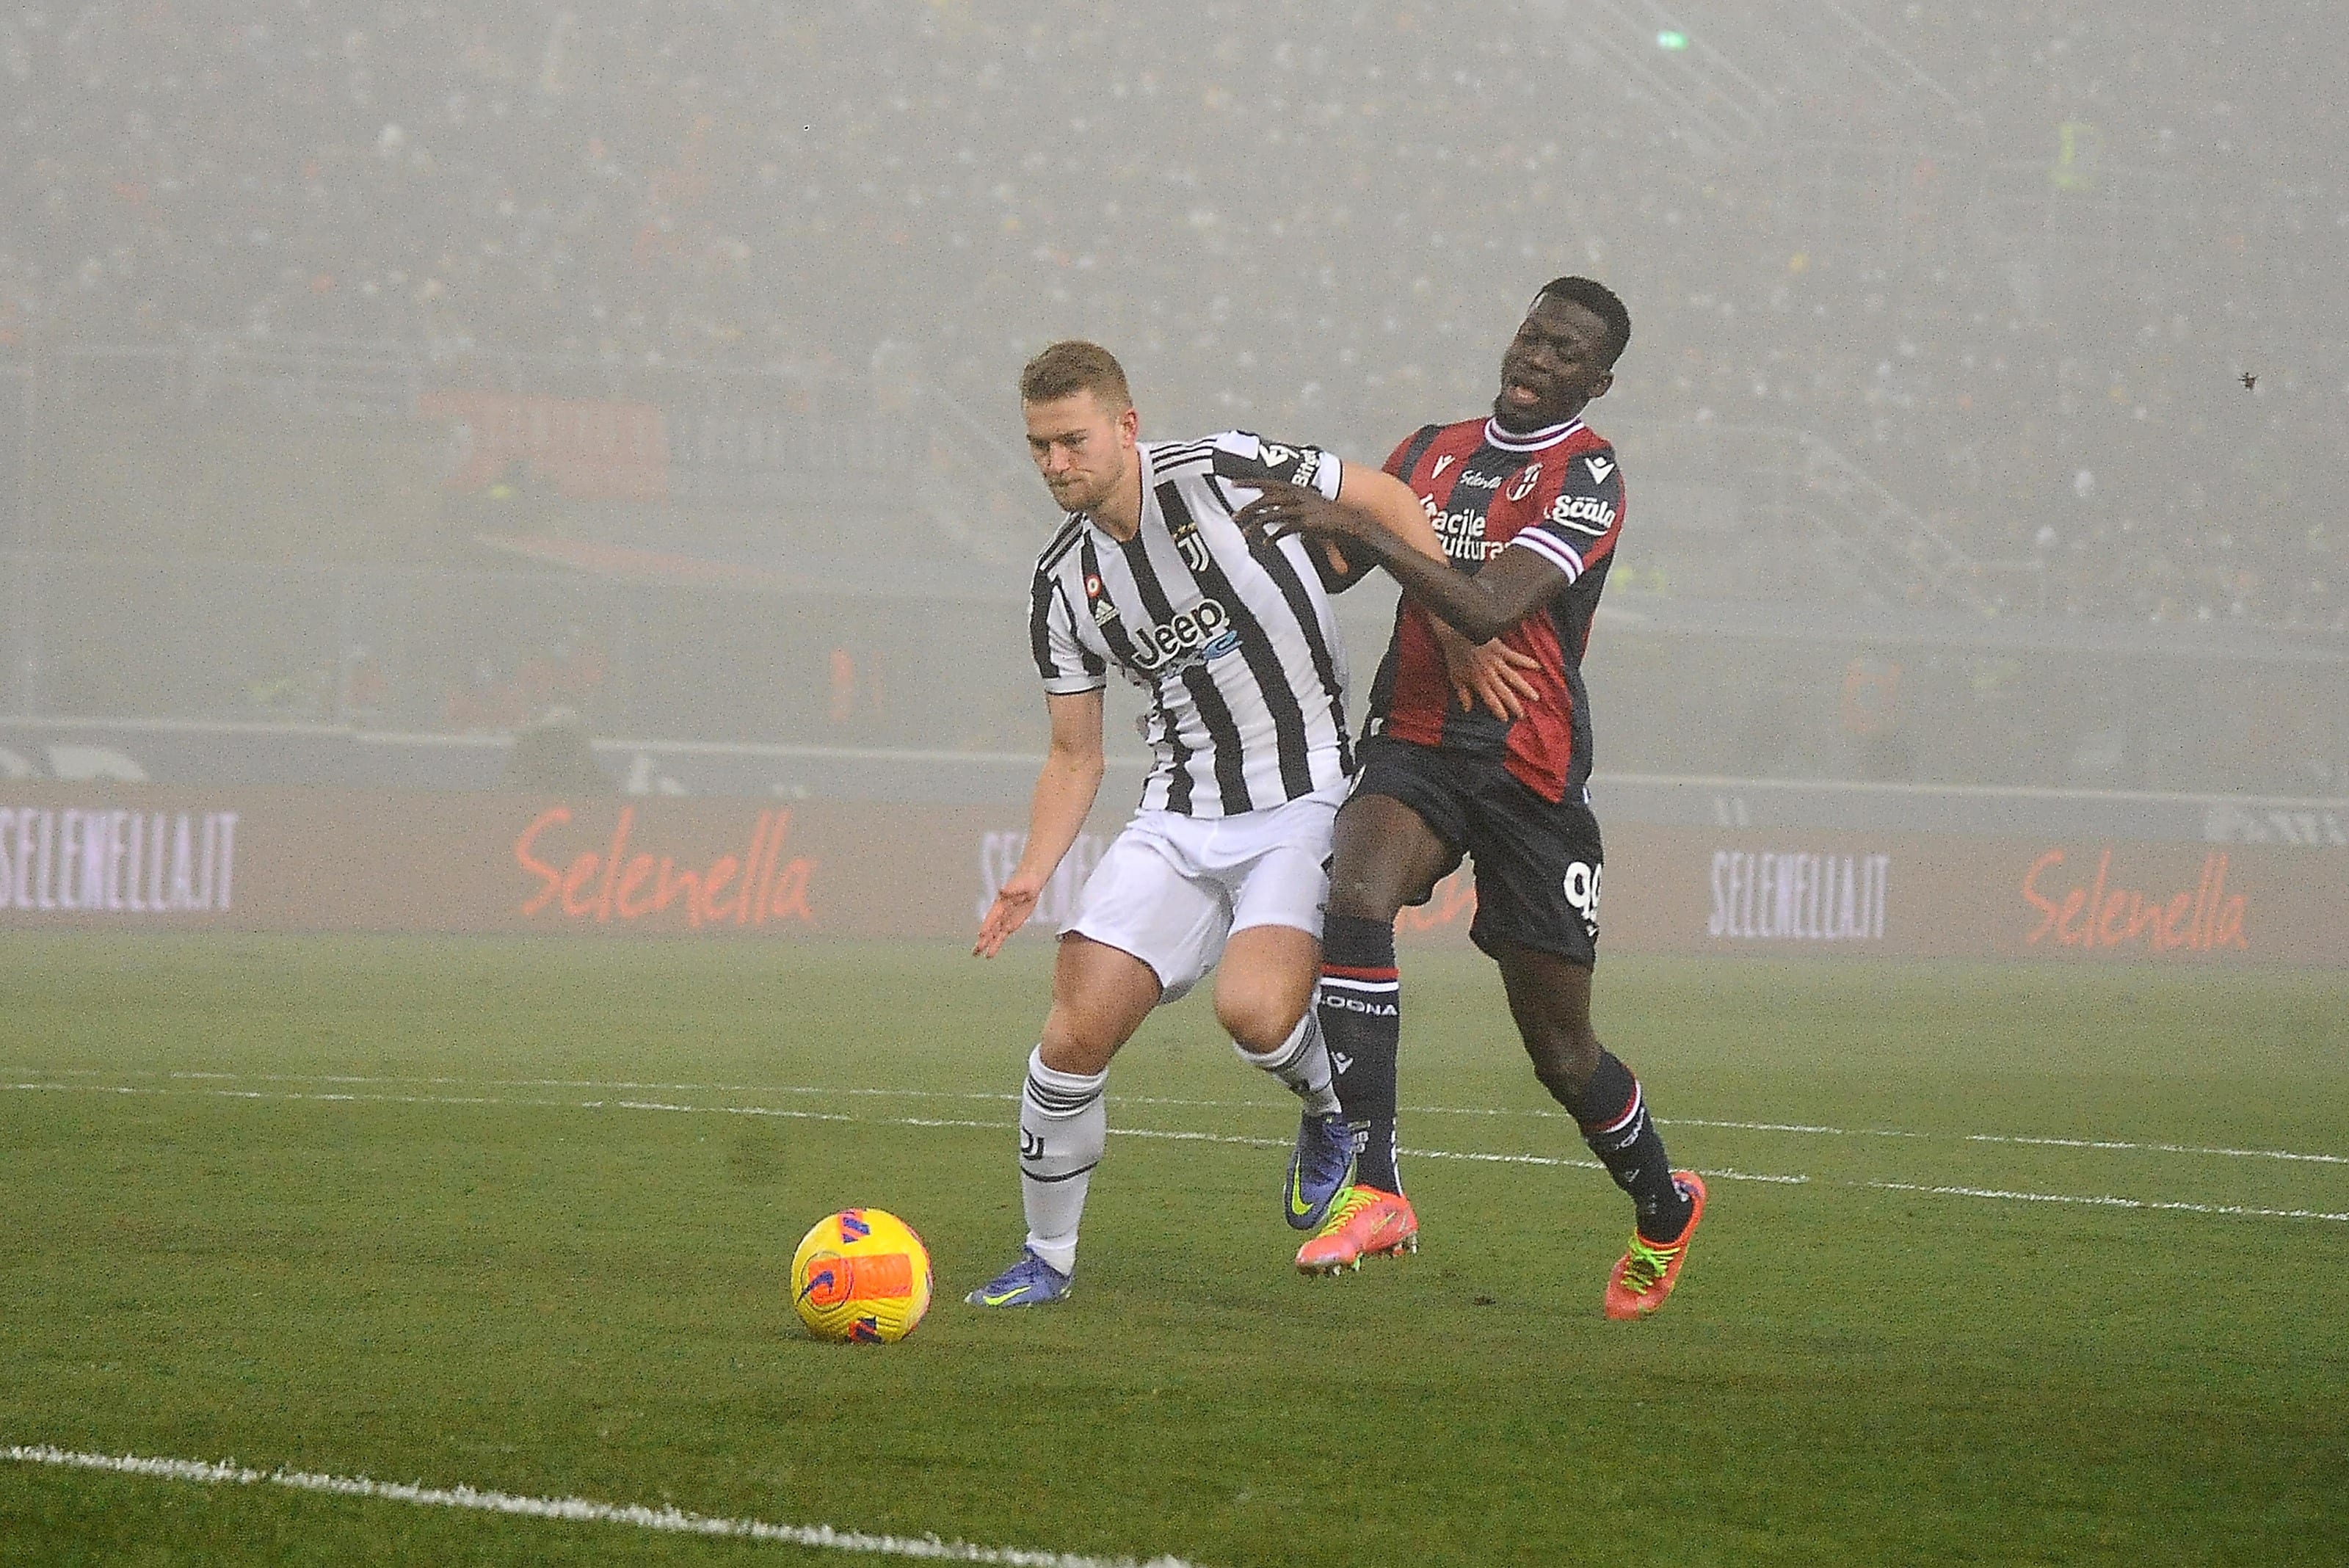 Bologna 0-2 Juventus: Player Ratings as Juve Return to Winning Ways